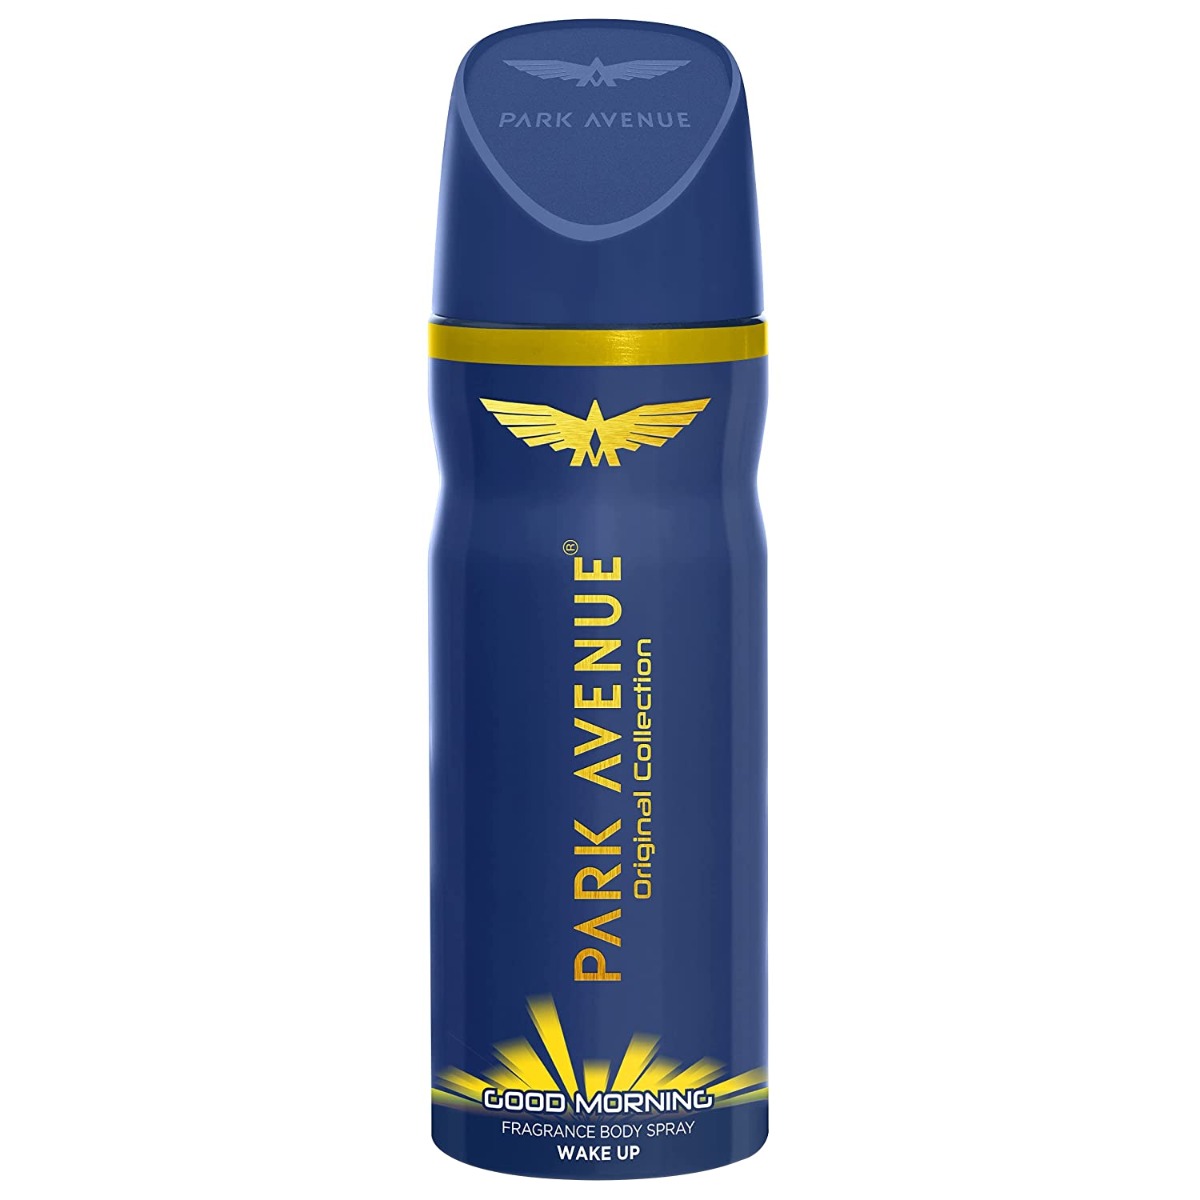 Park Avenue Good Morning Deodorant Body Spray, 150ml